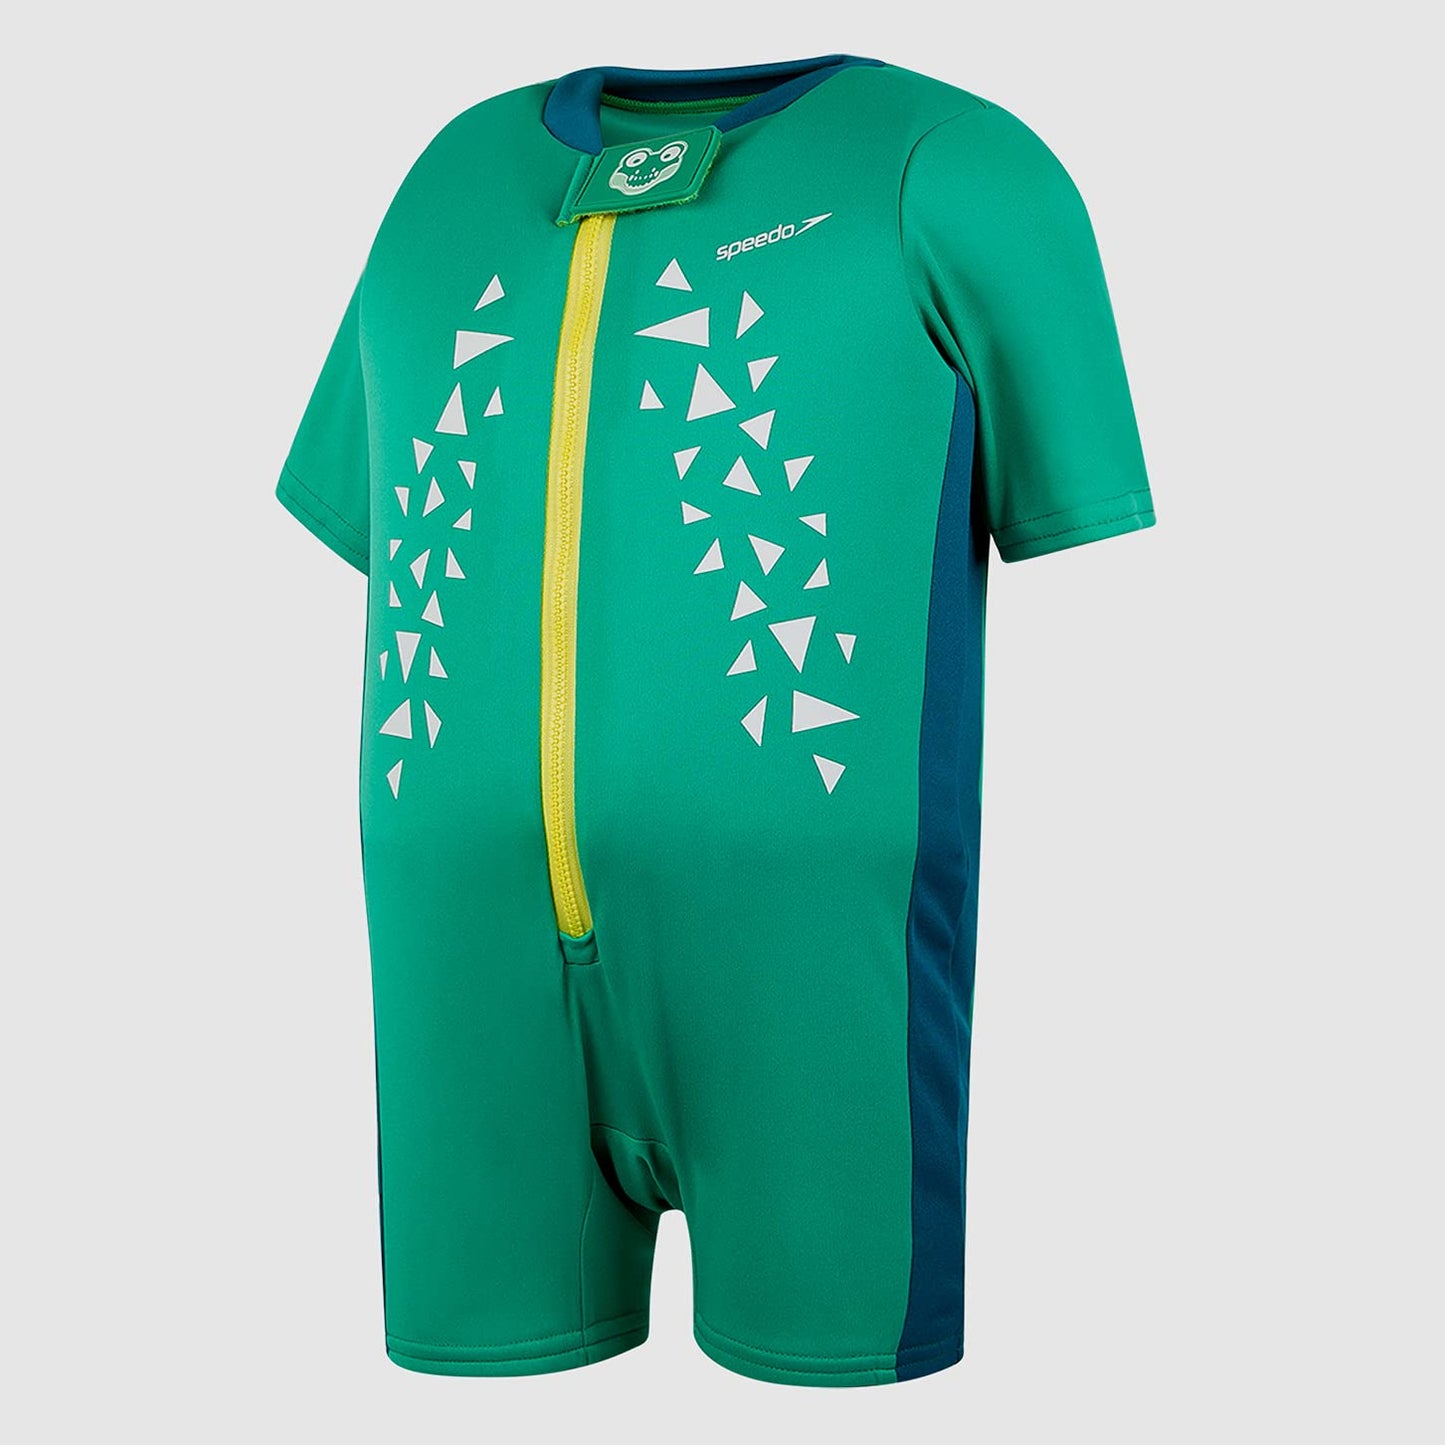 Speedo Croc Printed Float Suit For Tots (Color: Green/Blue) - Best Price online Prokicksports.com